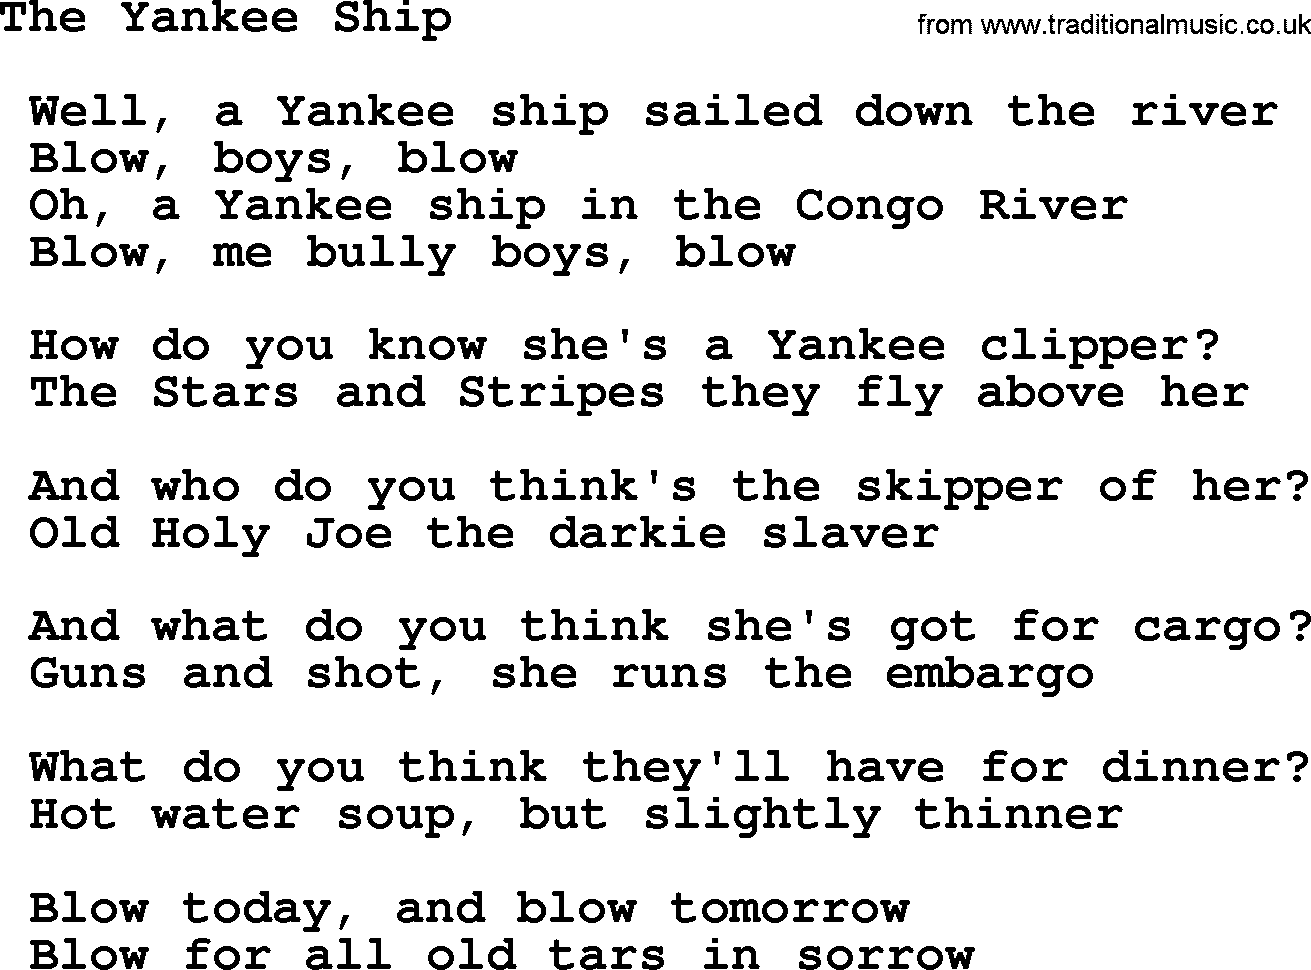 Sea Song or Shantie: The Yankee Ship, lyrics